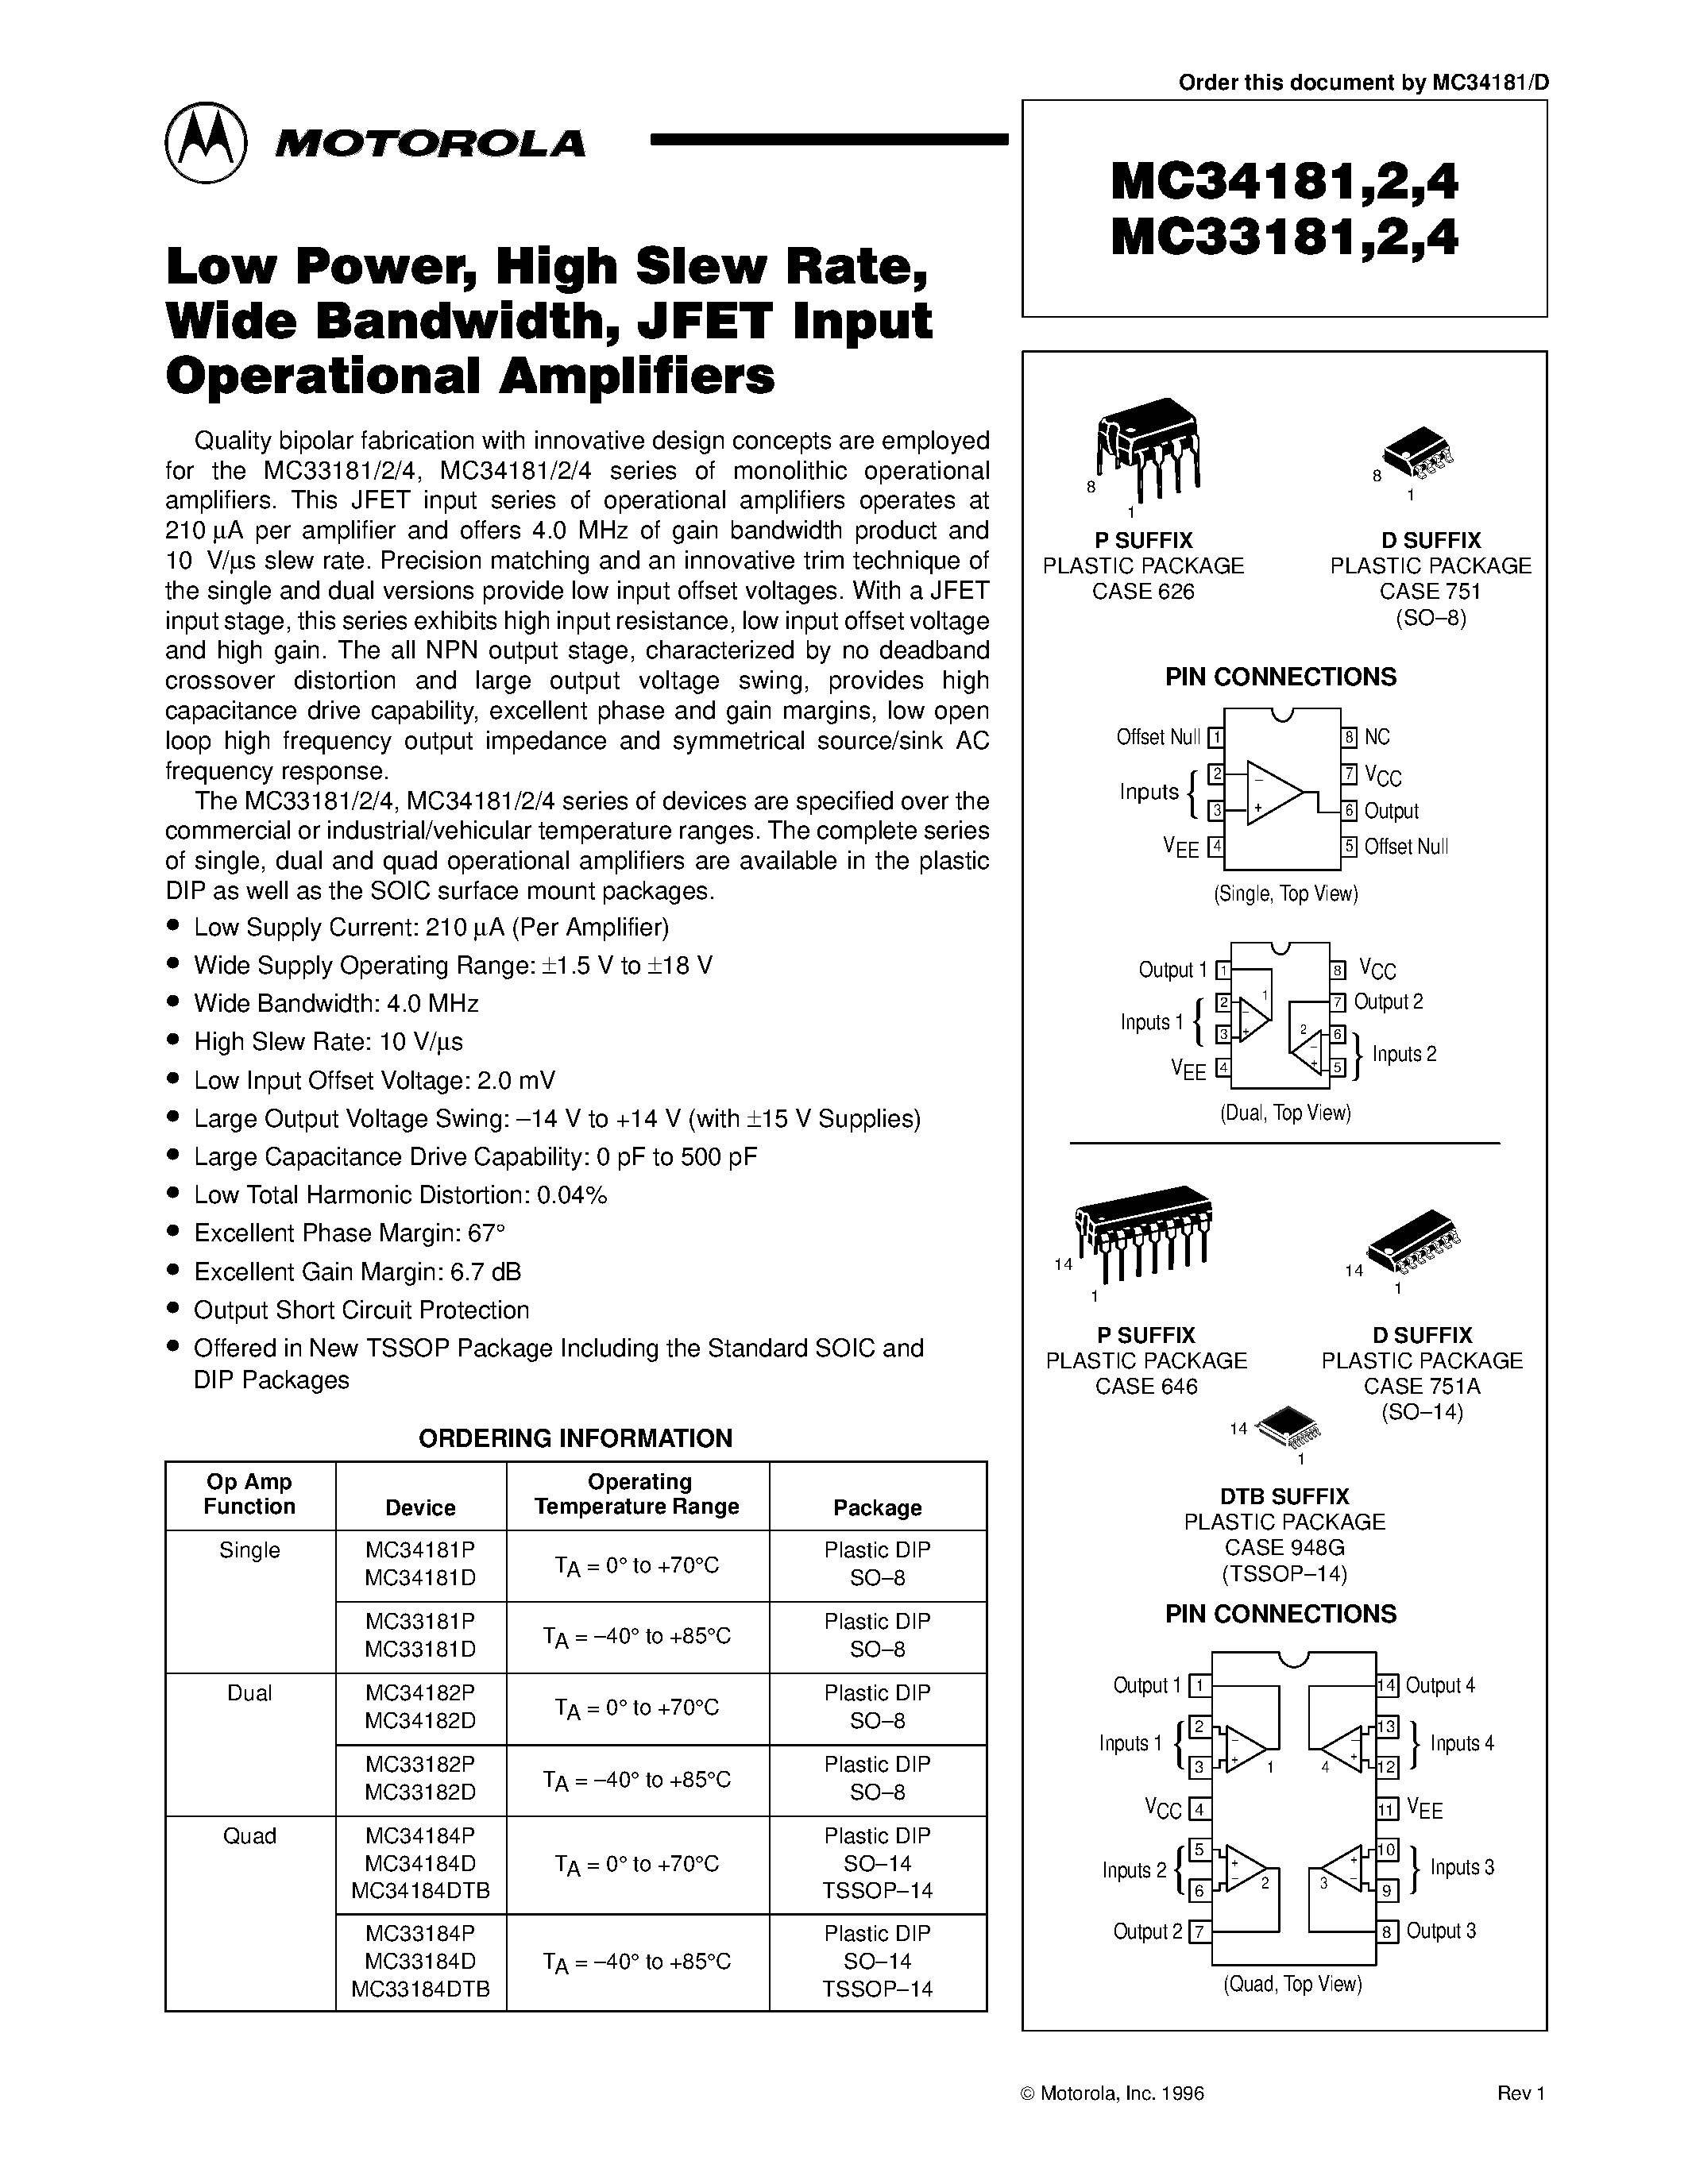 Datasheet MC33181 - (MC33182/MC33184) Low Power/High Slew Rate/Wide Bandwidth/JFET Input Operational Amplifiers page 1